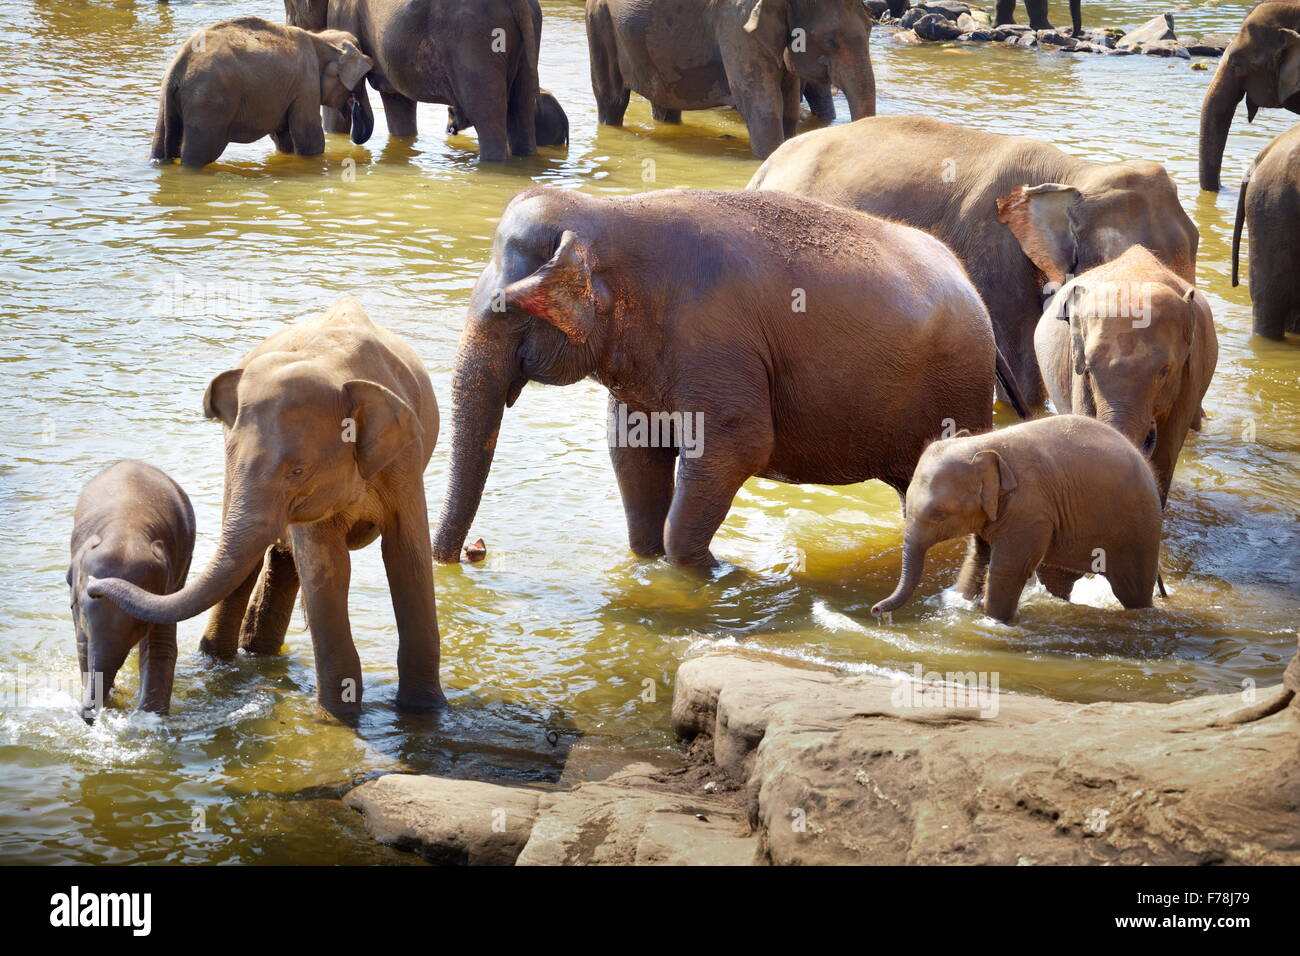 Elephants in the bath - Pinnawela Elephant Orphanage for wild Asian elephants, Sri Lanka Stock Photo